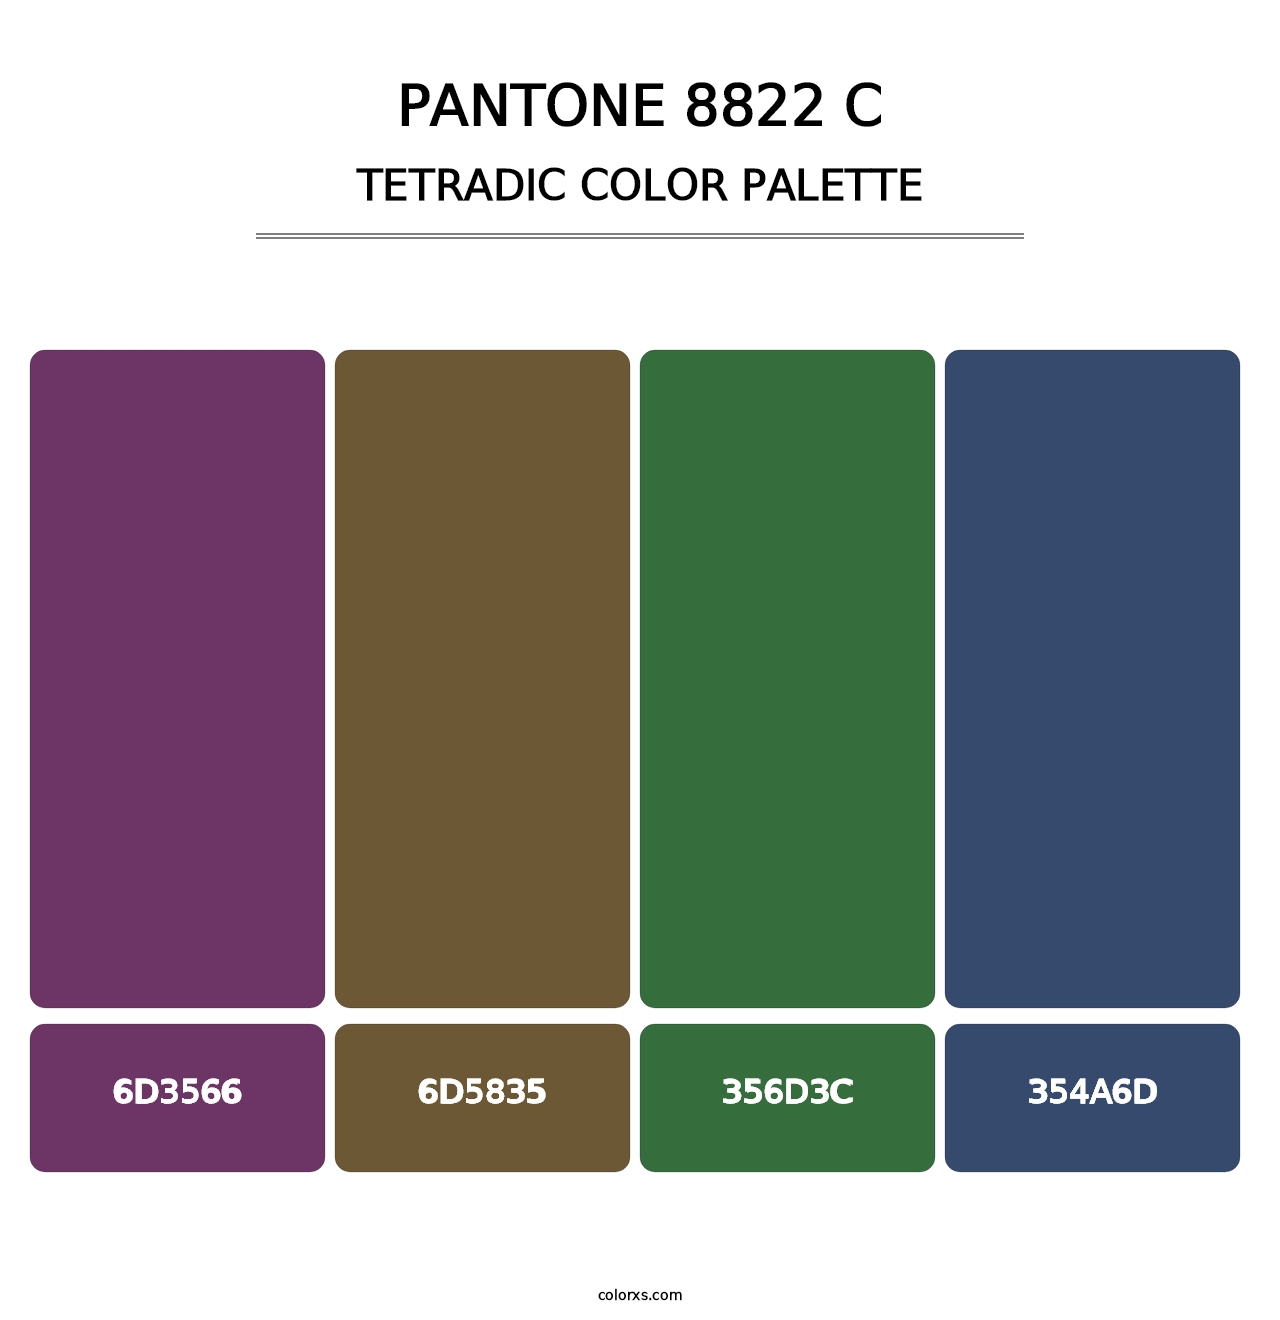 PANTONE 8822 C - Tetradic Color Palette